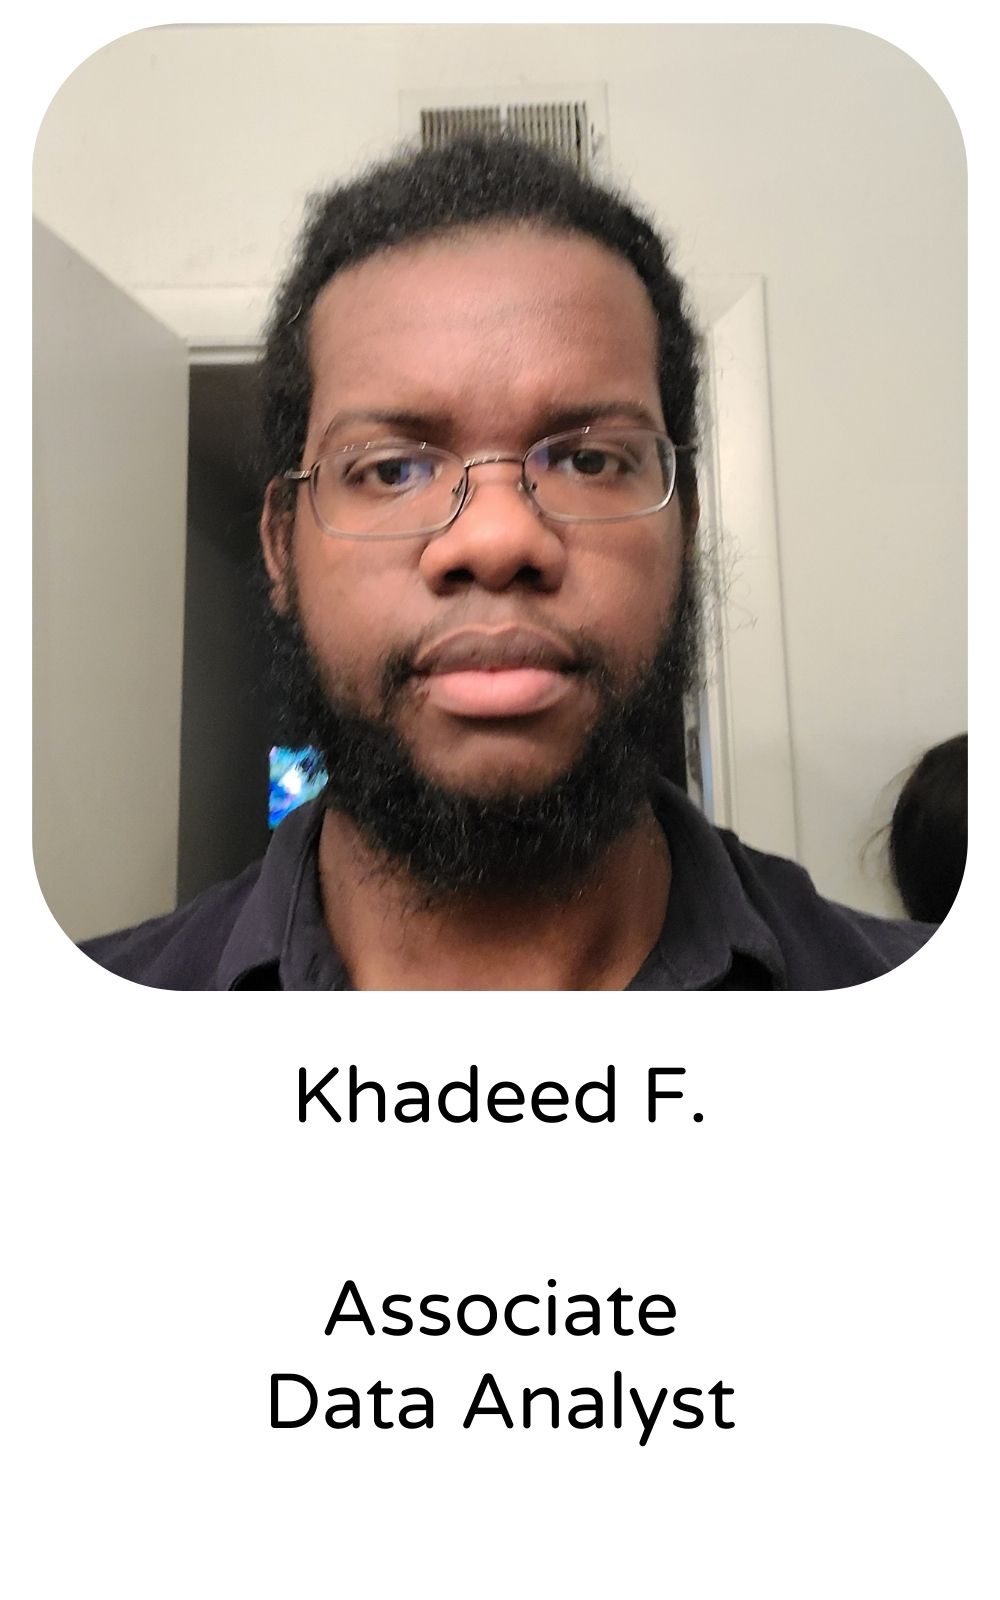 Khadeed F, Associate, Data Analyst